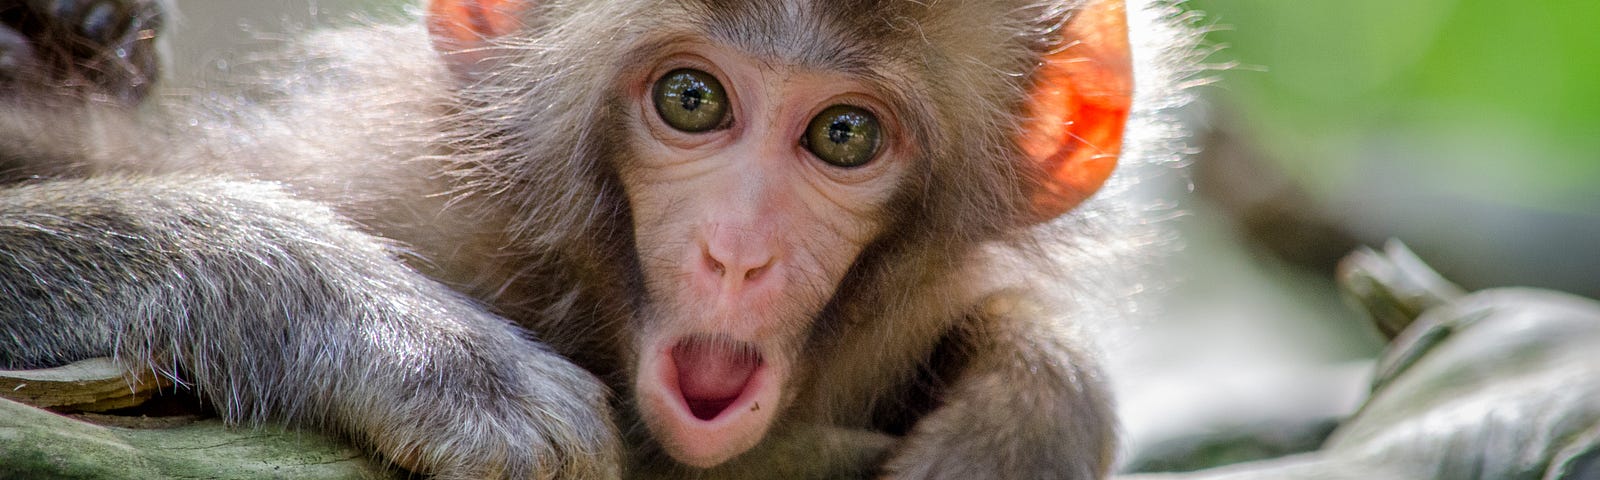 A monkey looking shocked